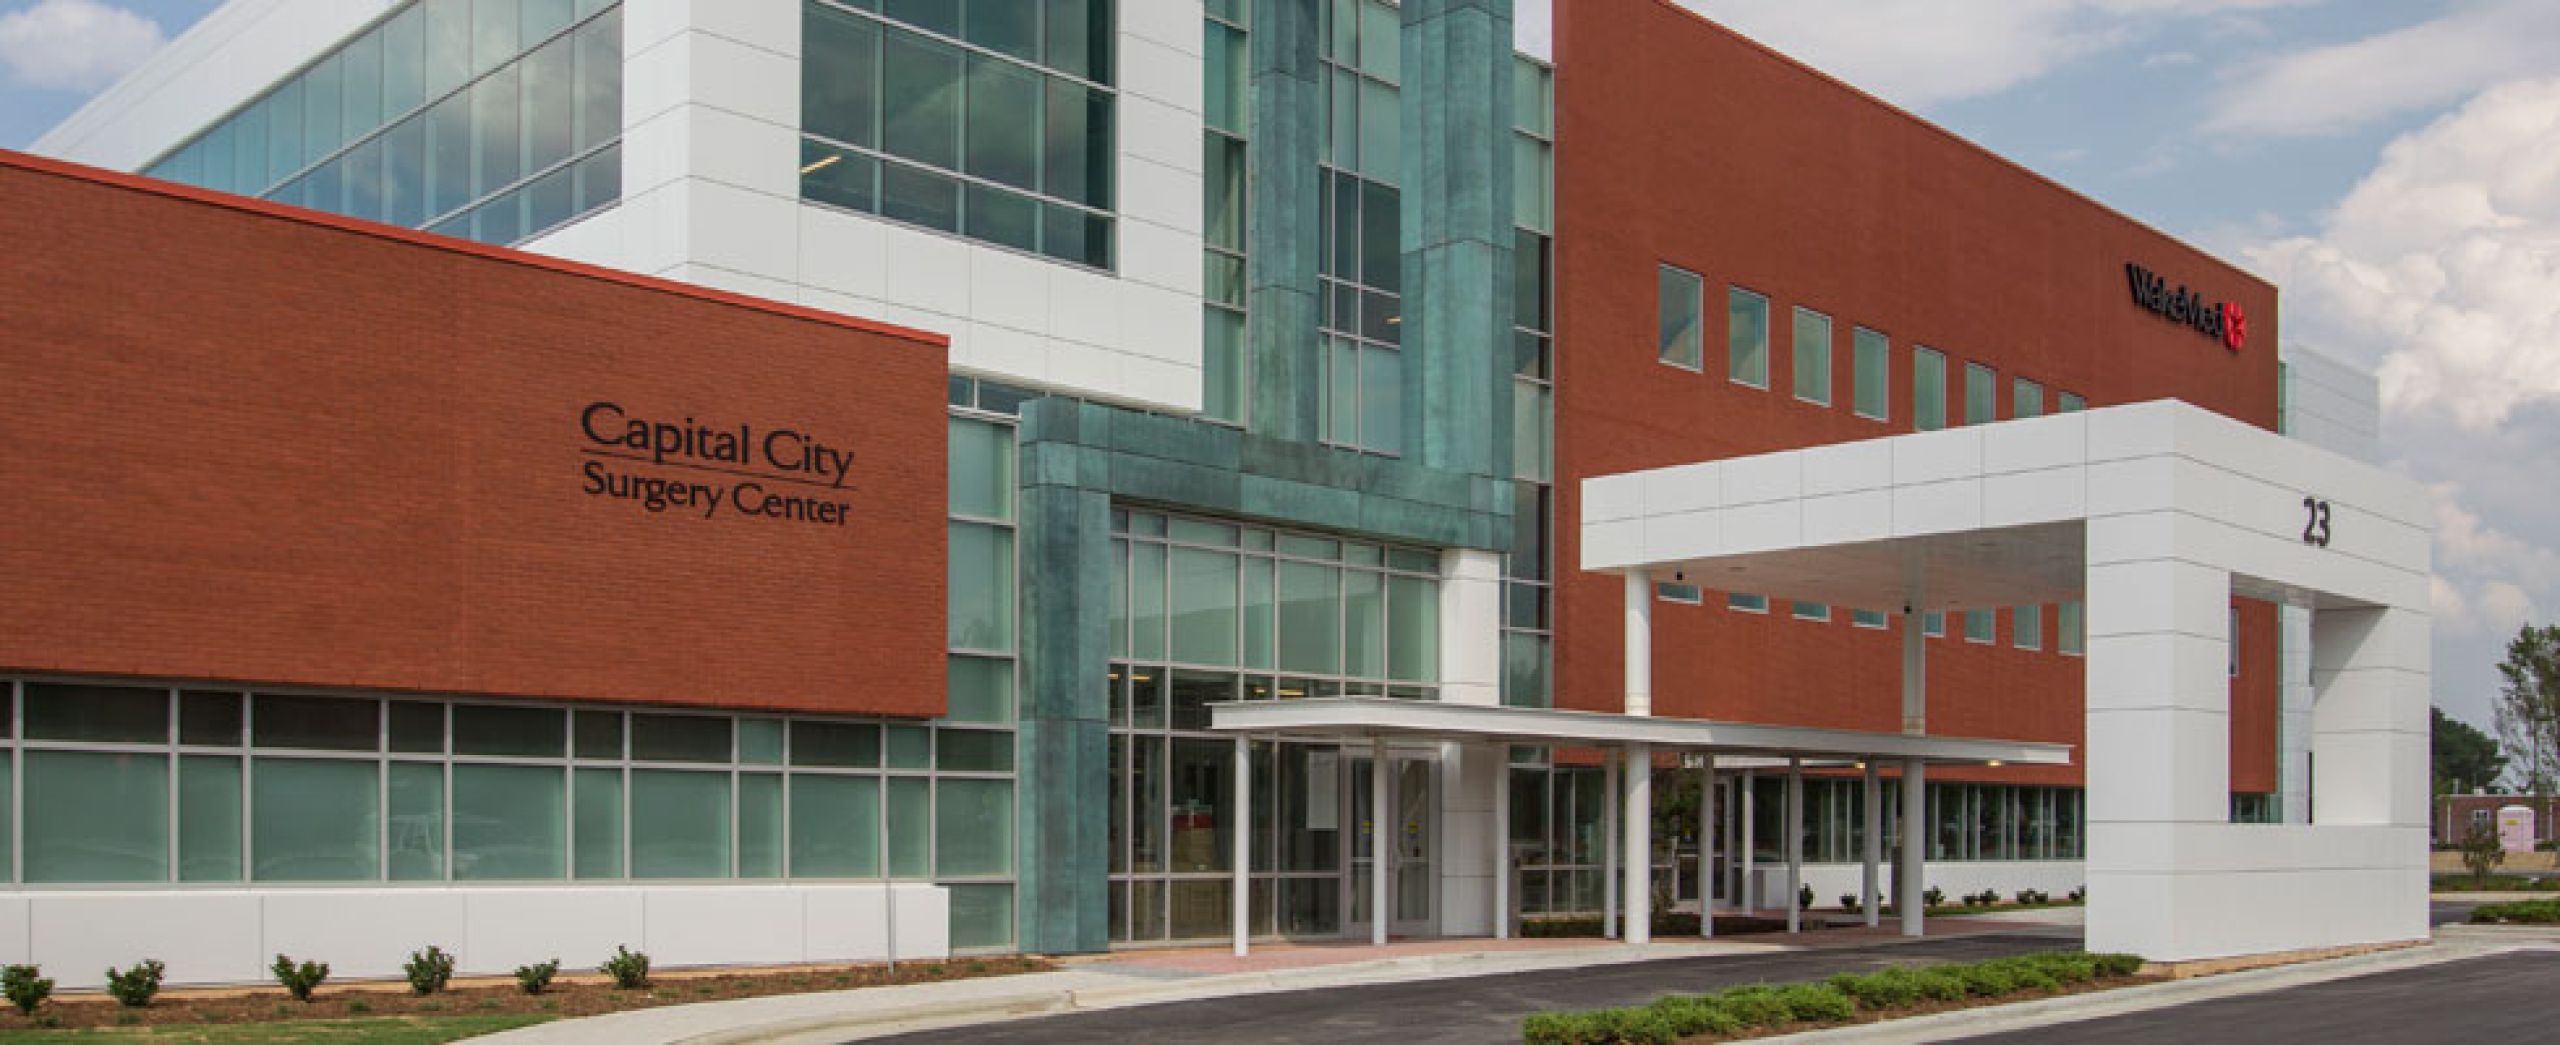 Capital City Surgery Center building